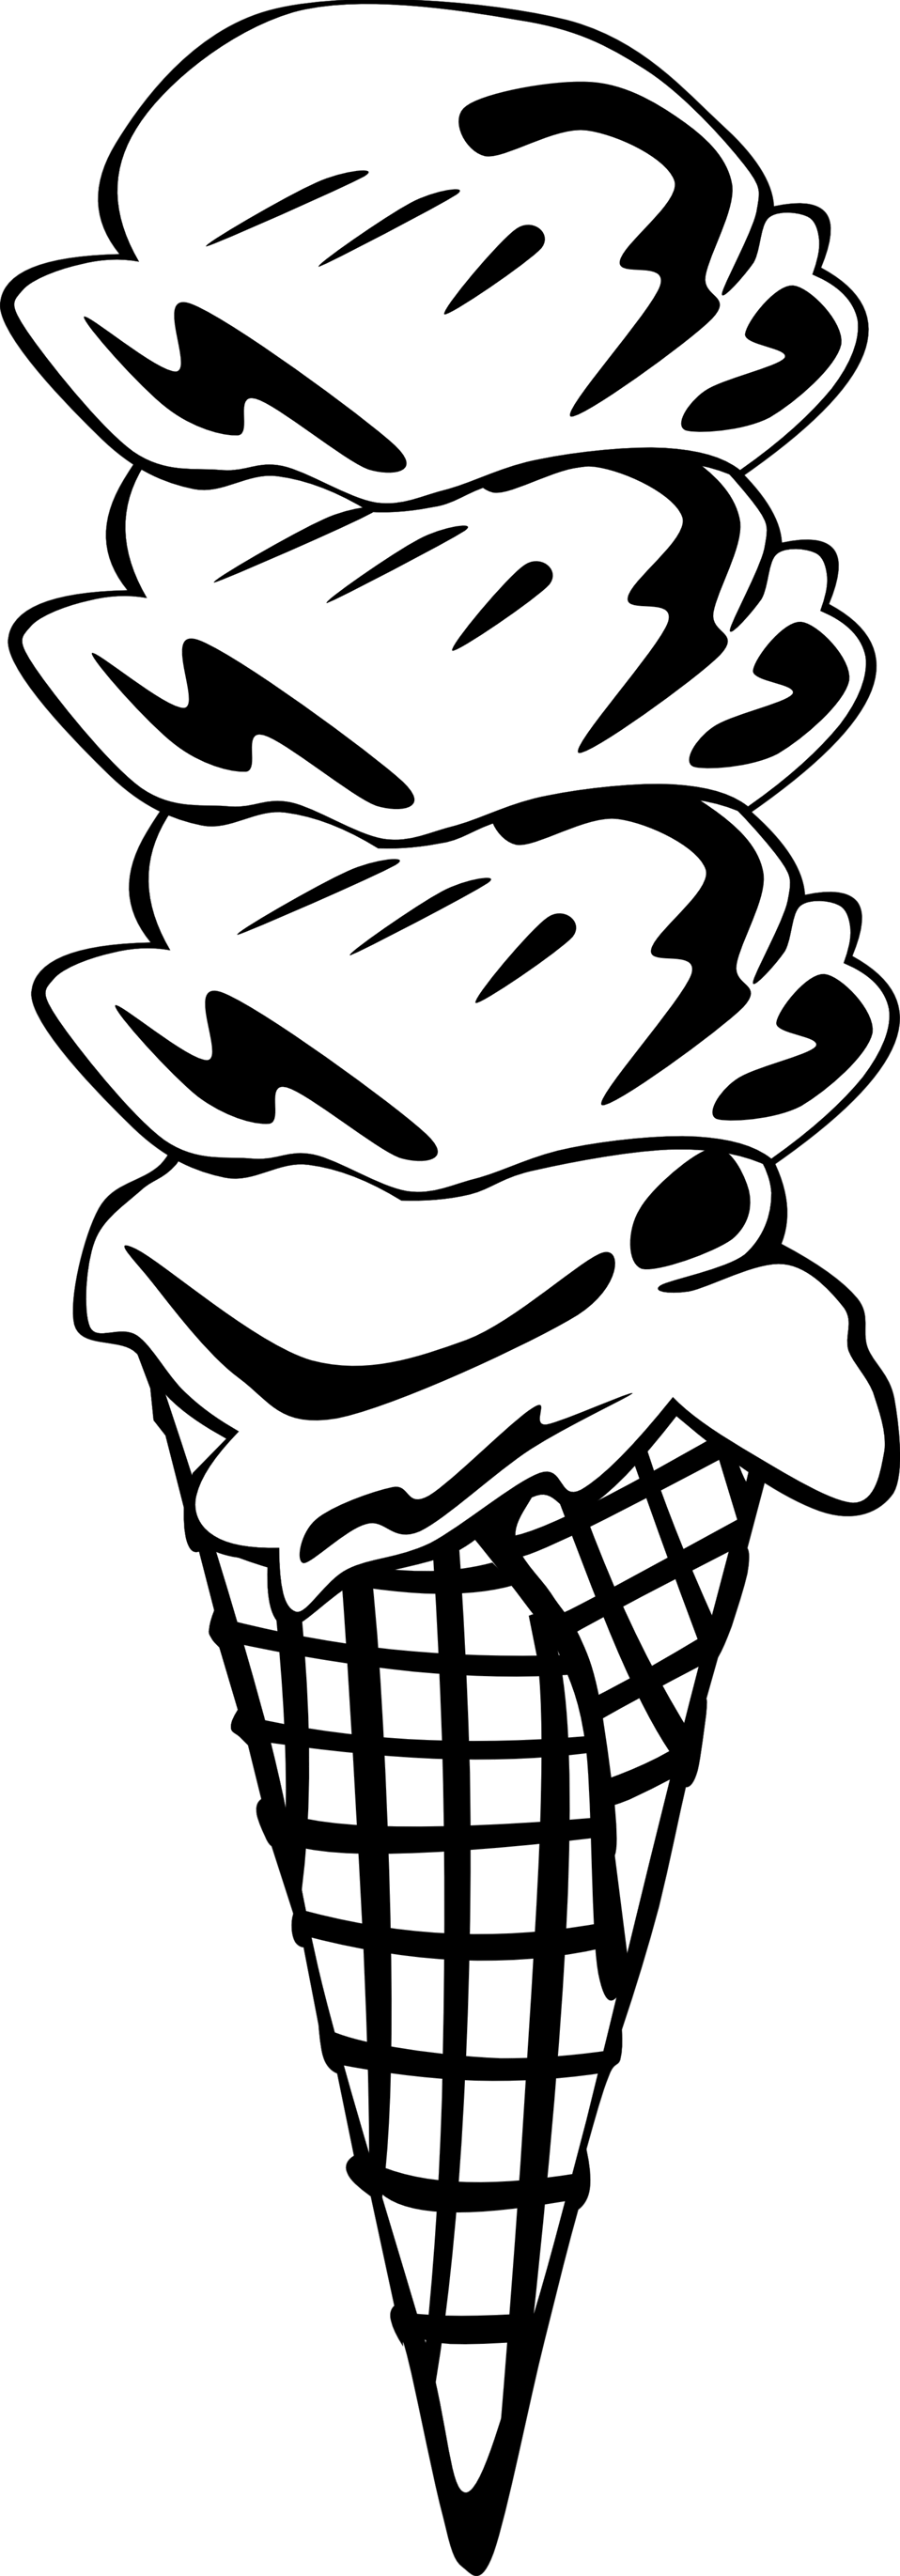 Public domain clip art. Waffle clipart black and white